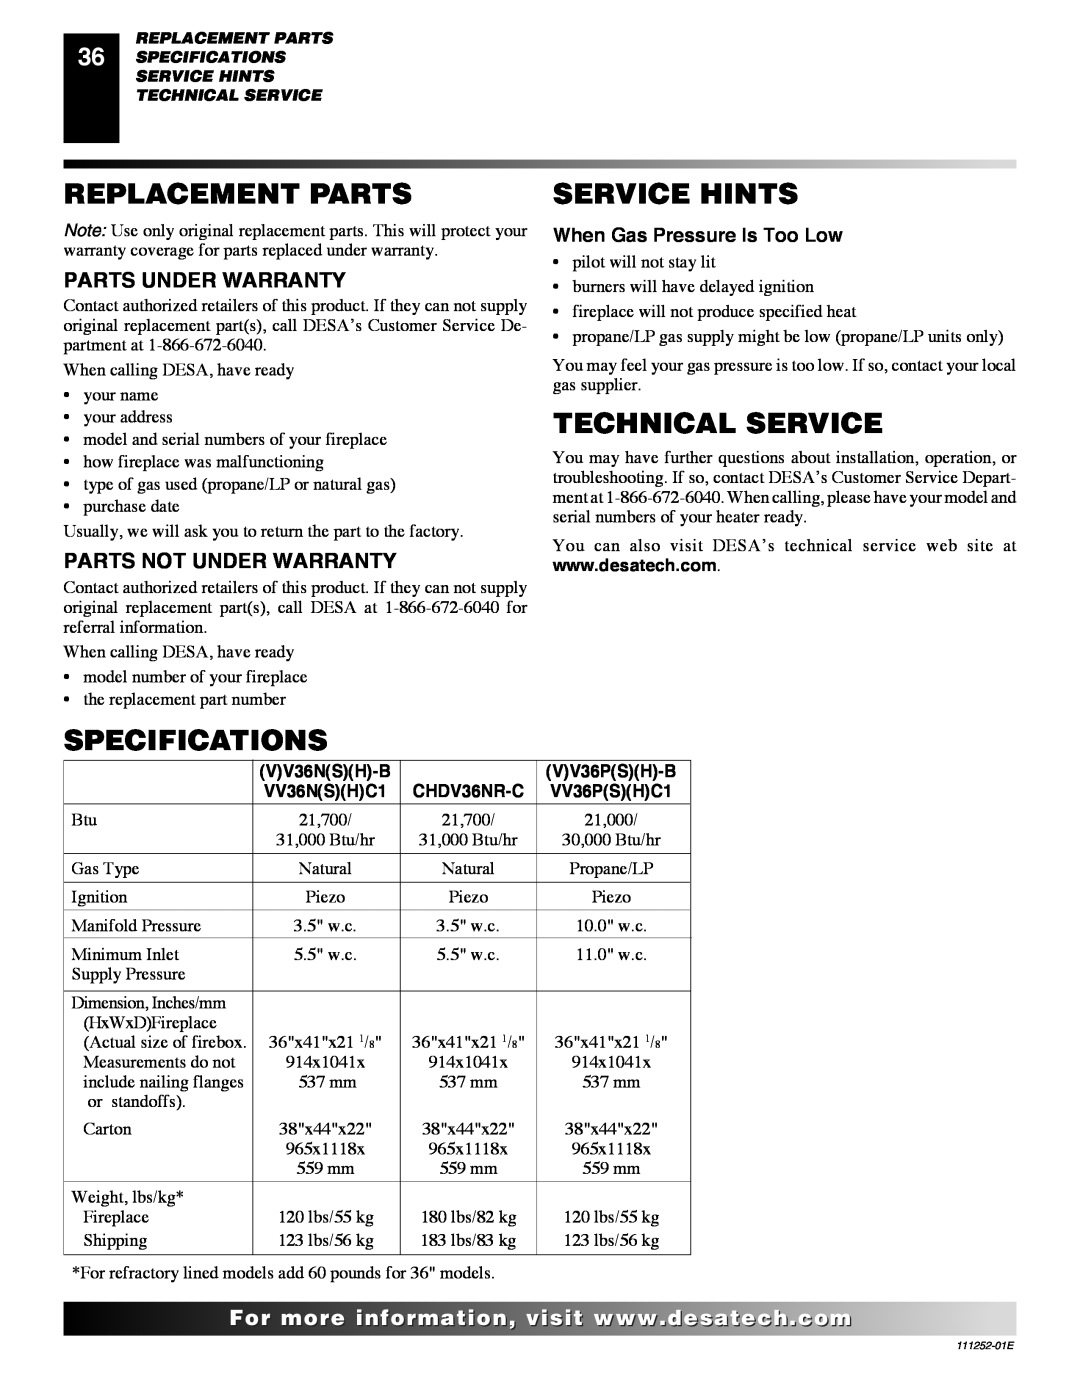 Desa CHDV36NR-C Replacement Parts, Service Hints, Technical Service, Specifications, Parts Under Warranty 